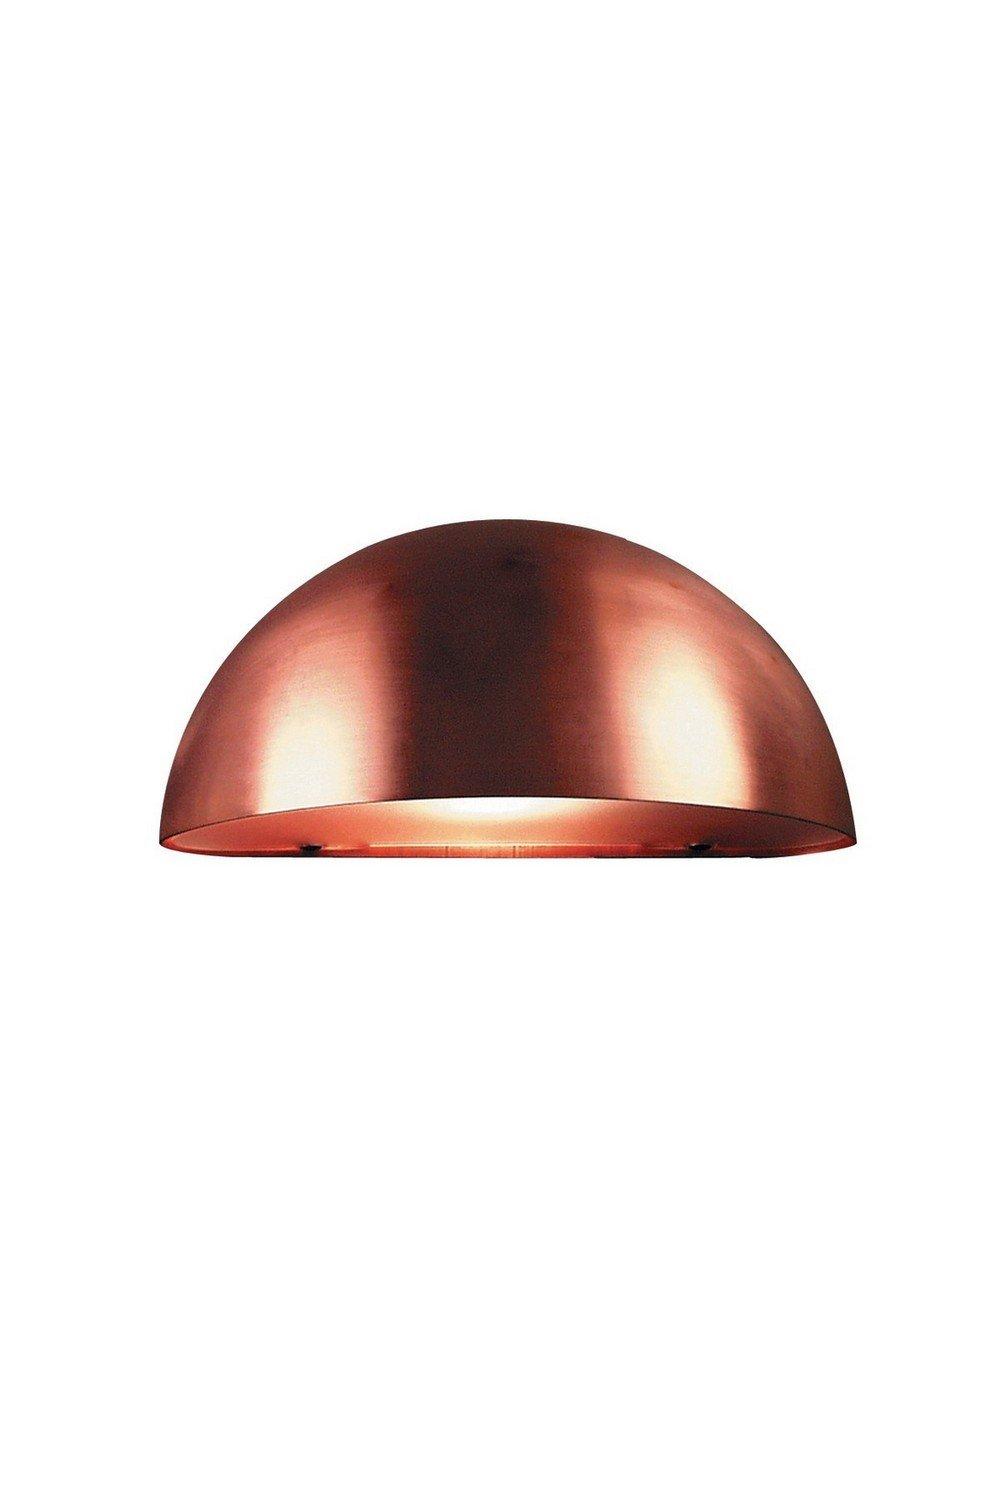 Scorpius Maxi Outdoor Down Wall Lamp Copper E27 IP33